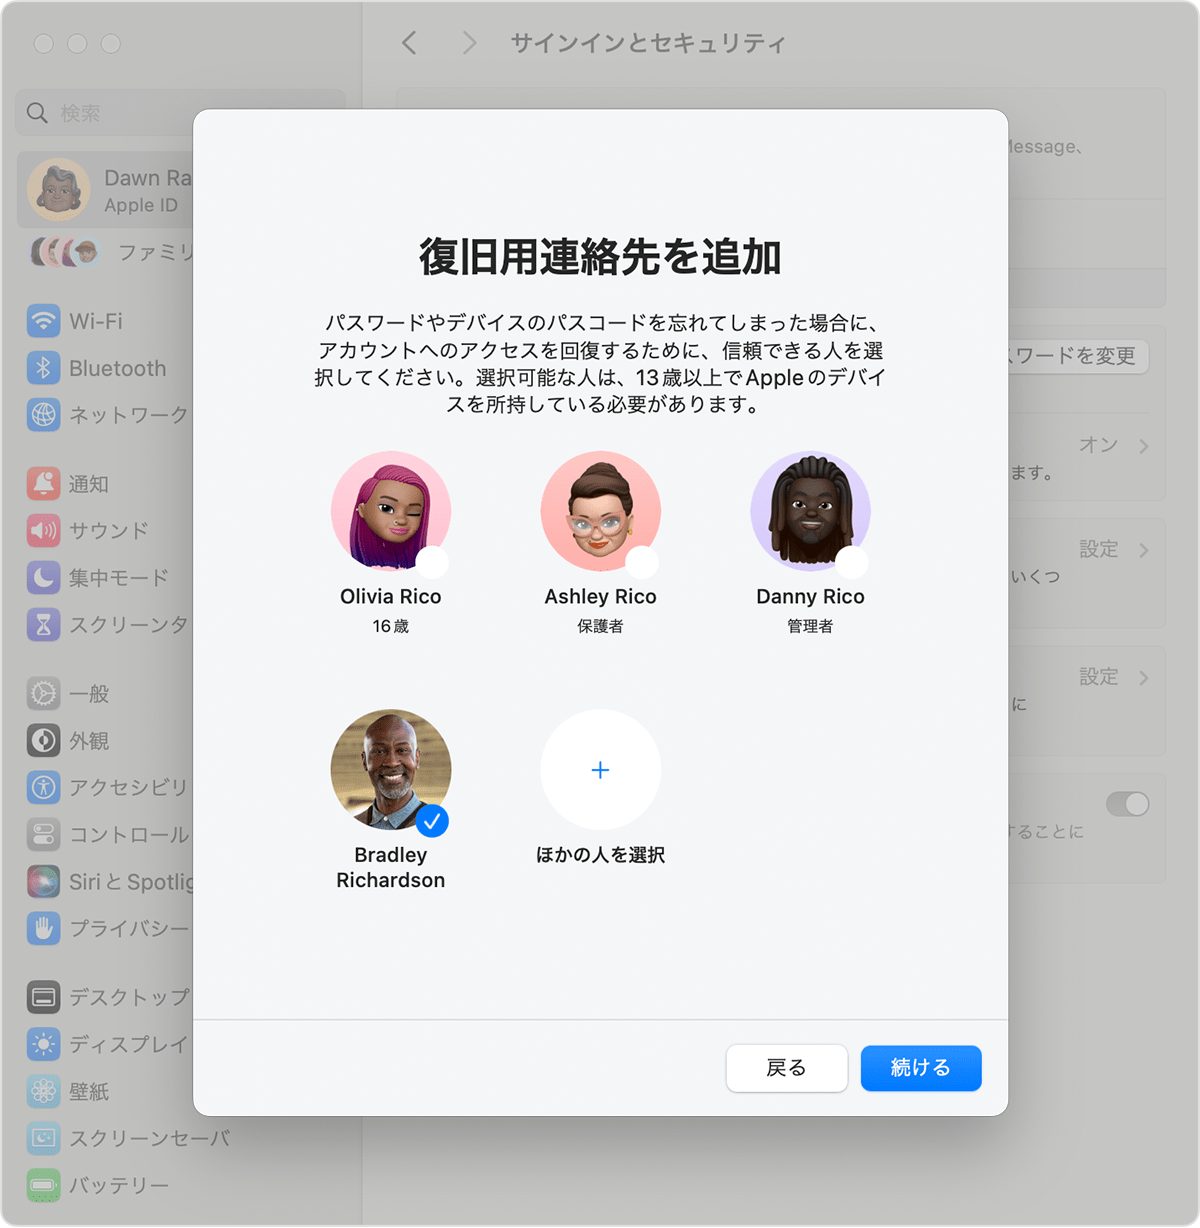 Mac の画面に、復旧用連絡先として追加できる連絡先が表示されています